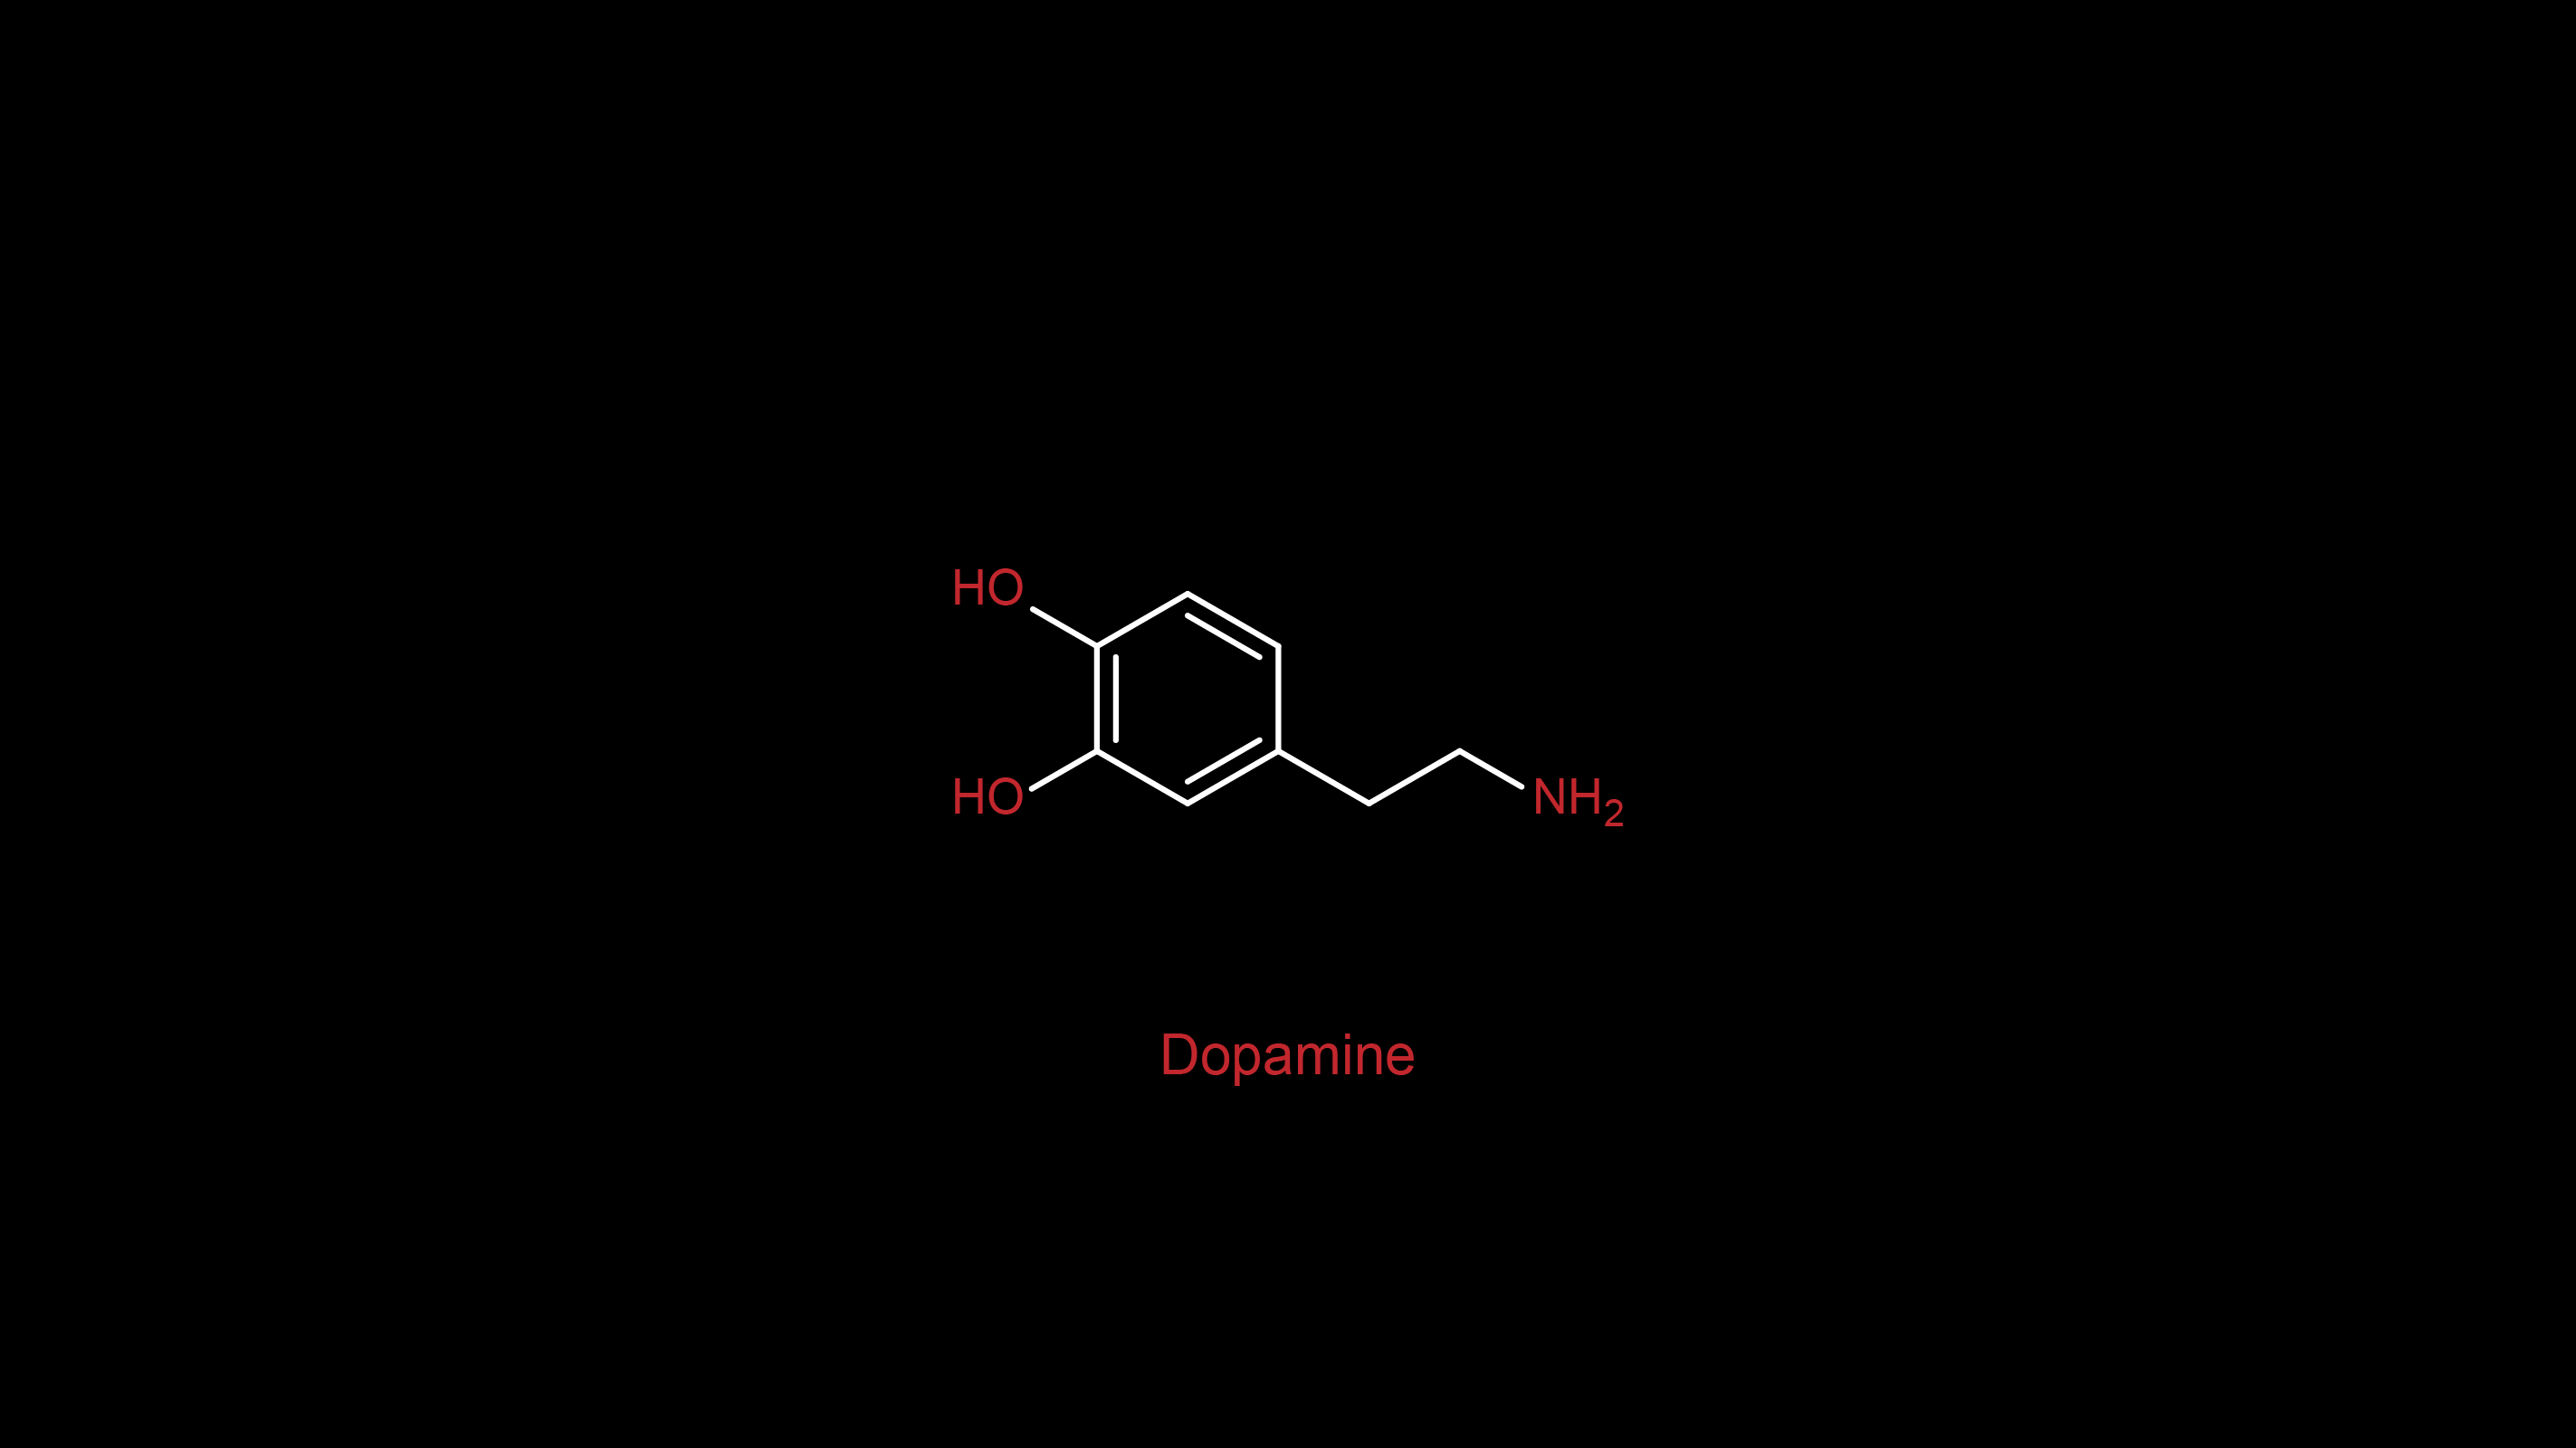 Dopamine [2846x1600] : wallpapers